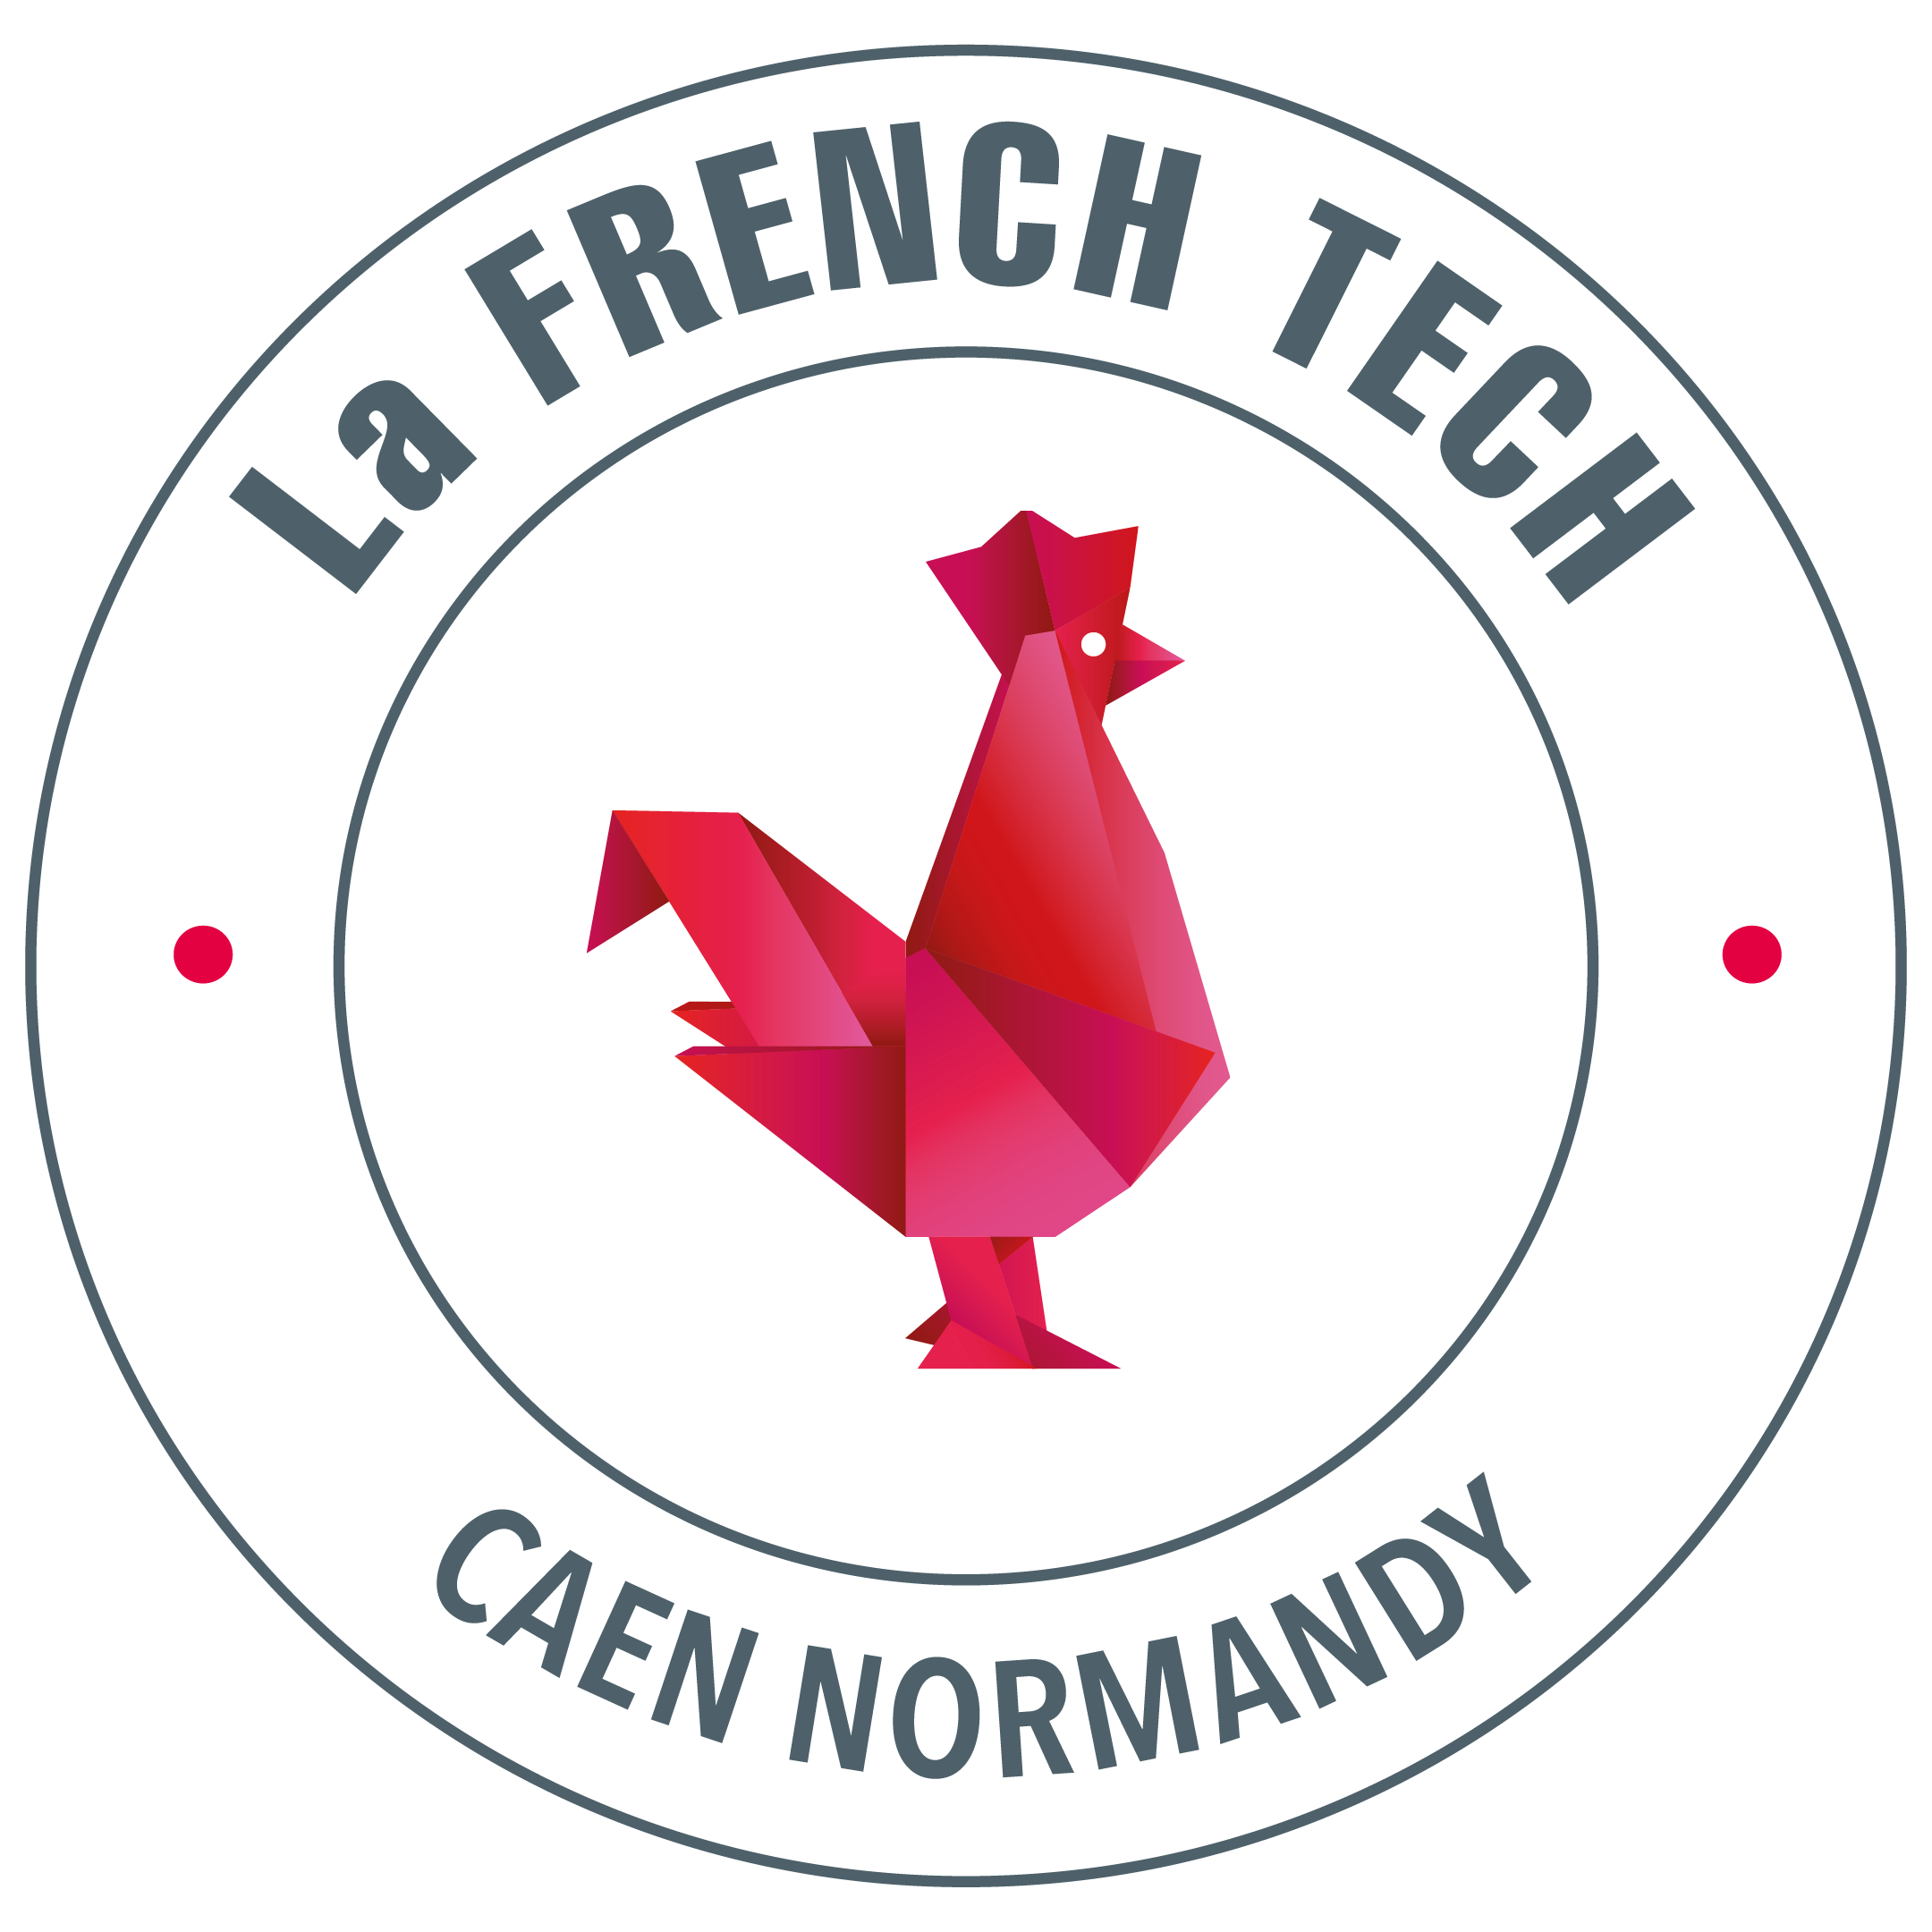 La French Tech Caen Normandy